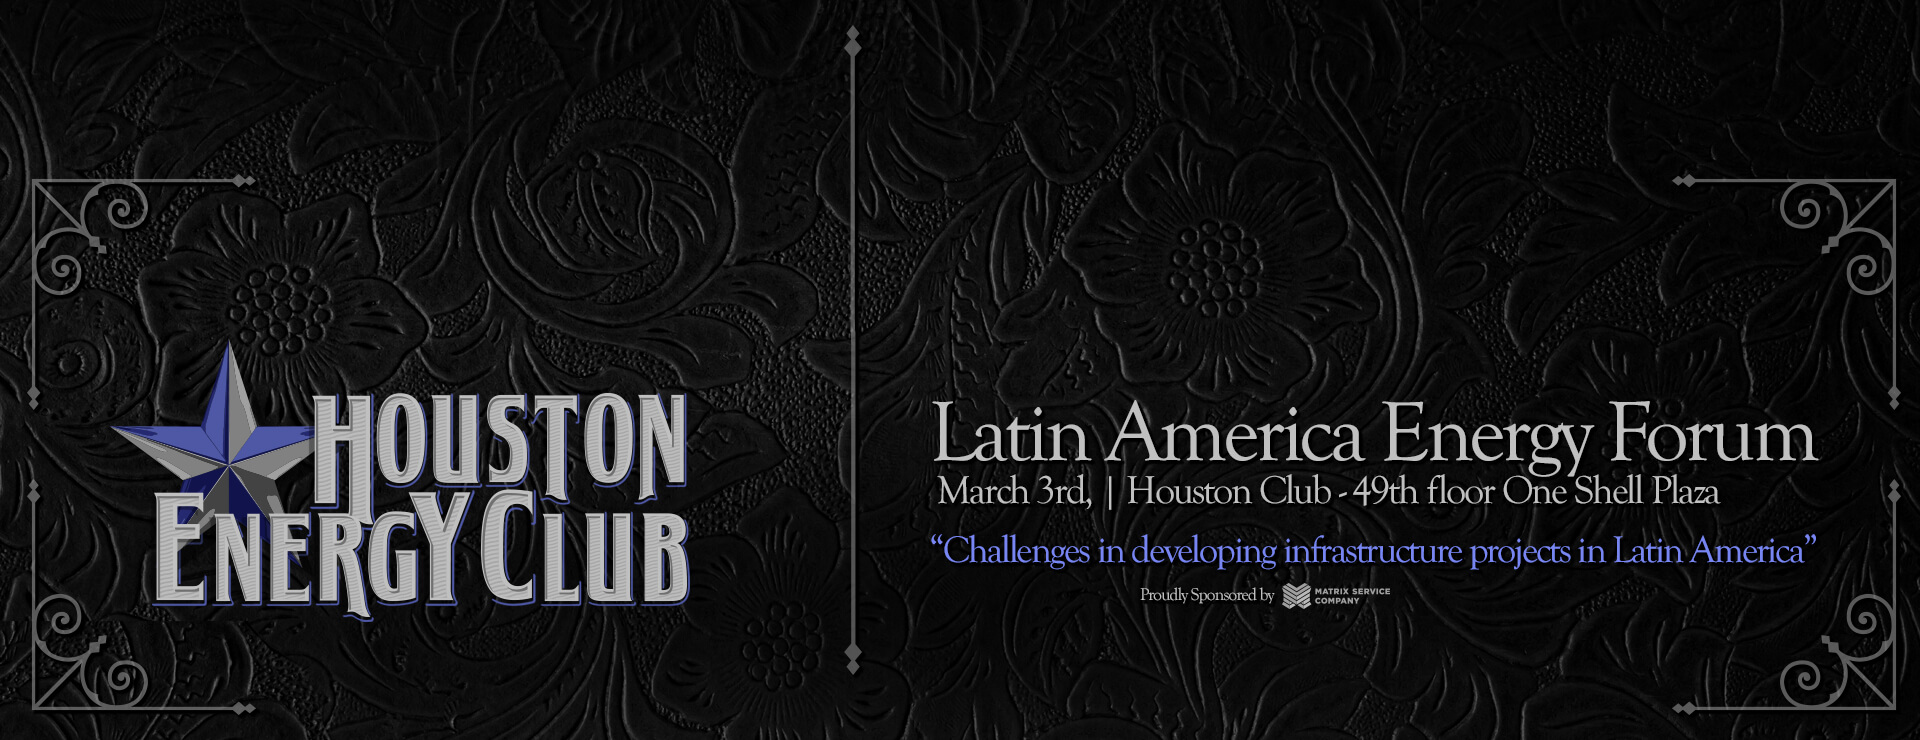 Houston Energy Club - Latin America Energy Forum